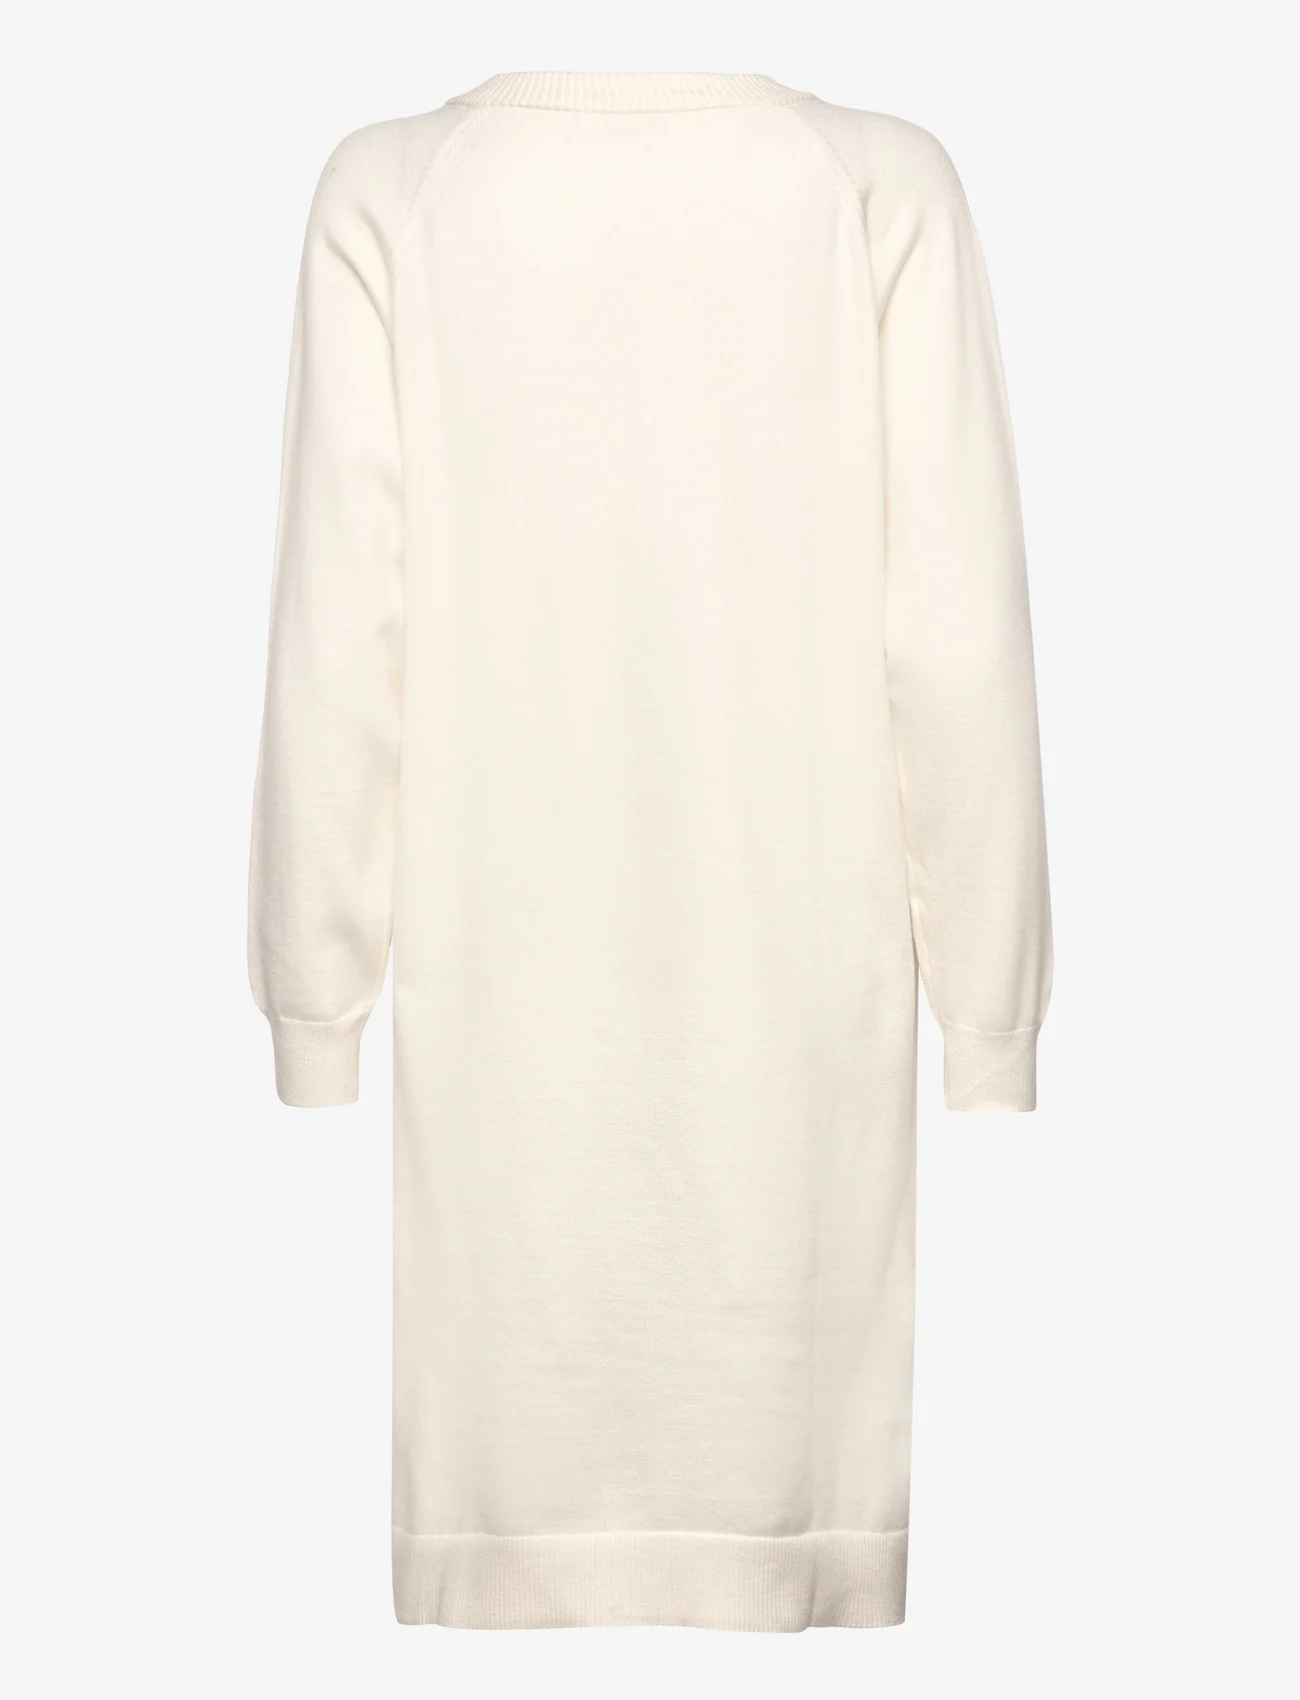 Coster Copenhagen - CC Heart CLARE comfy knit dress - strickkleider - off-white - 1